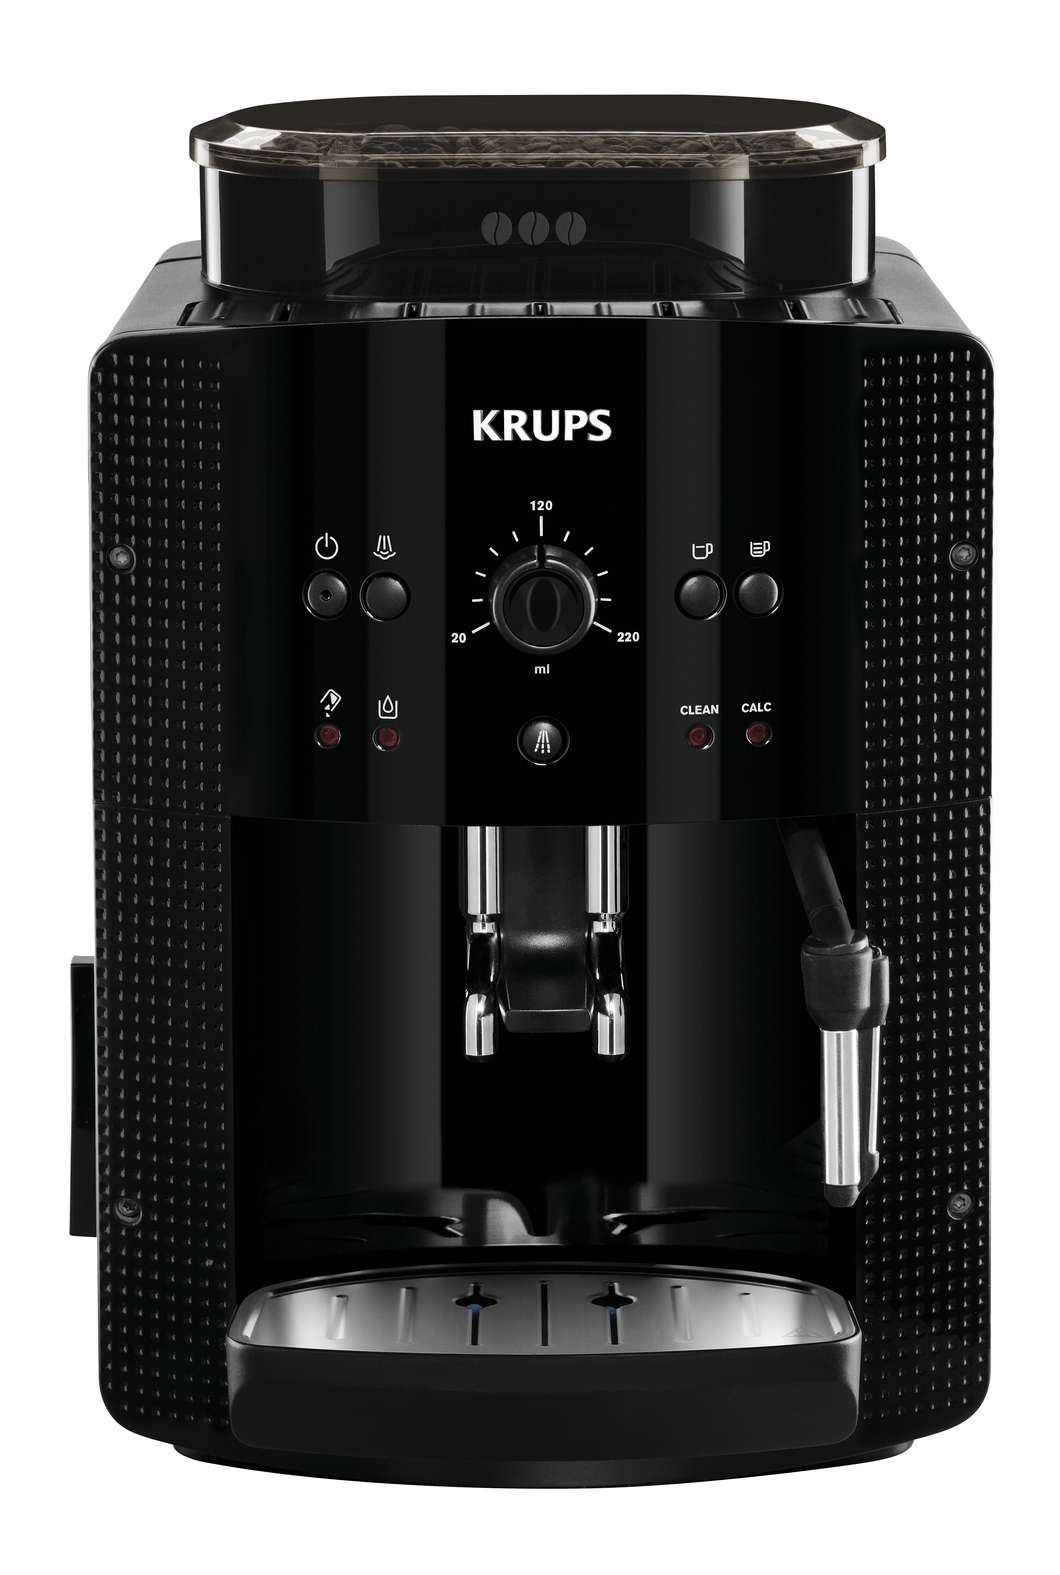 Krups Essential EA81M8 coffee maker